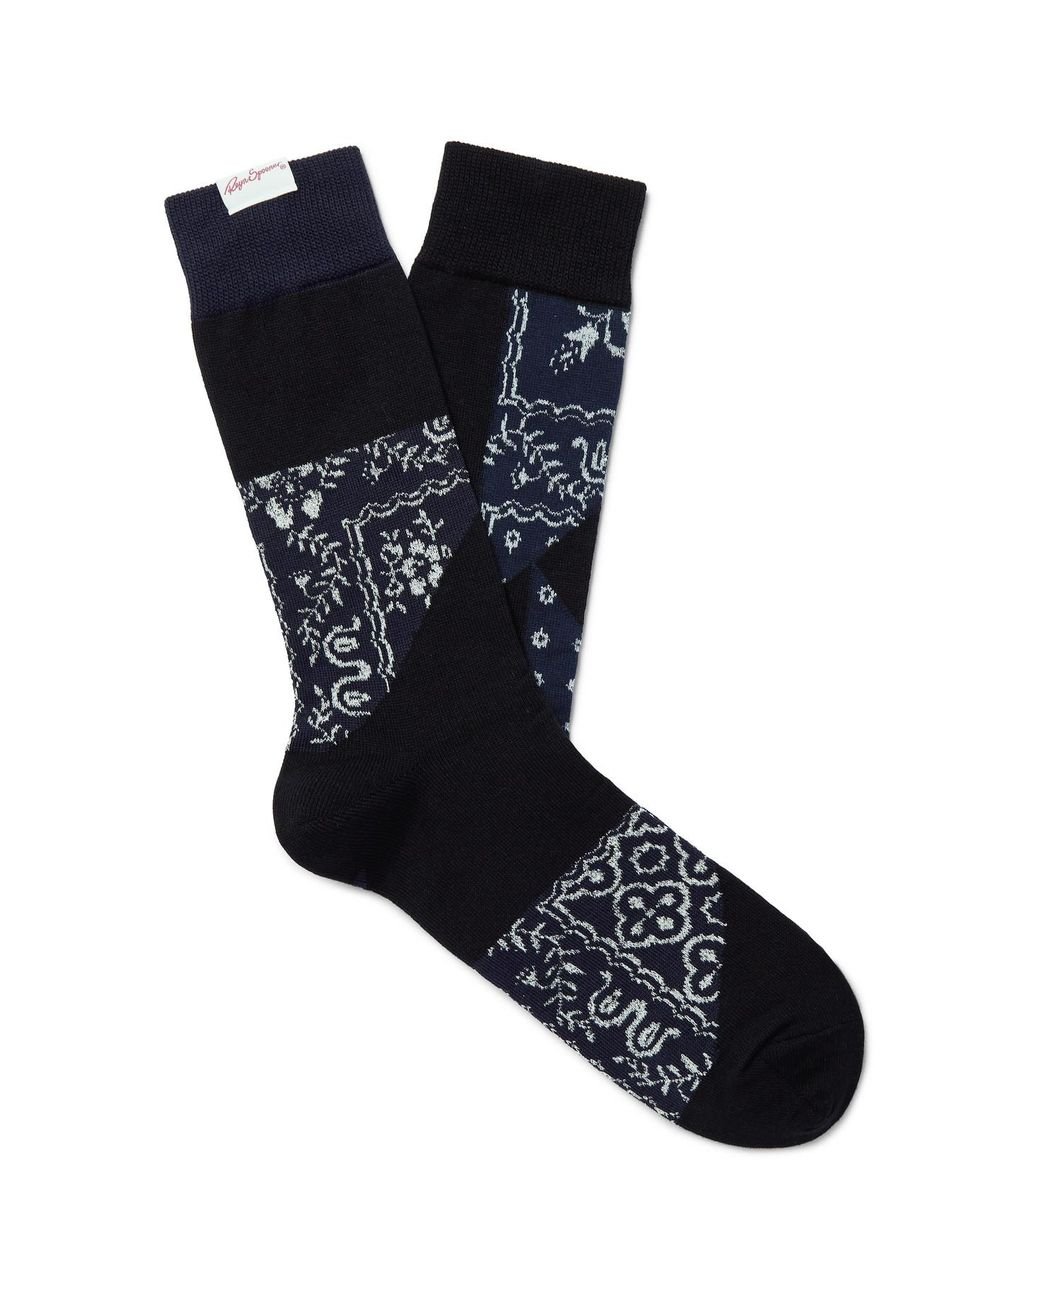 Sacai Patchwork Cotton-blend Socks in Black for Men - Lyst